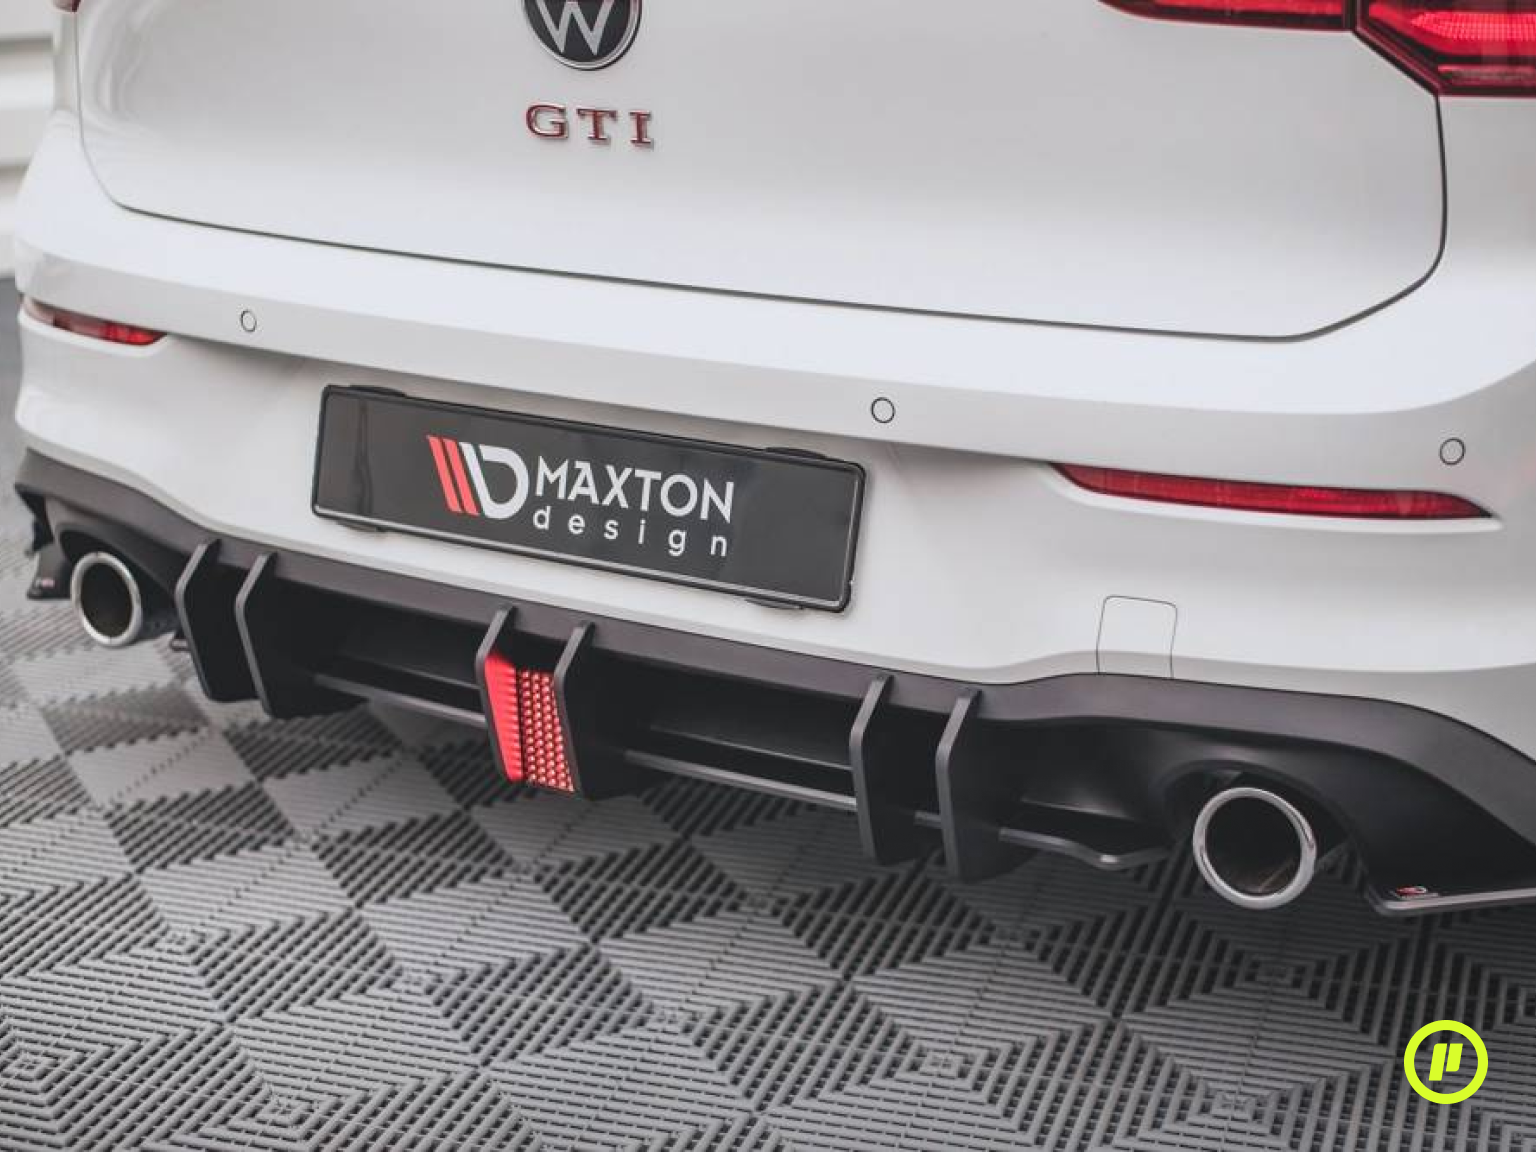 Maxton Design - Racing Durability Rear Diffuser v2 + LED Stop Light for Volkswagen Golf 8 GTI (Mk8 2019+)